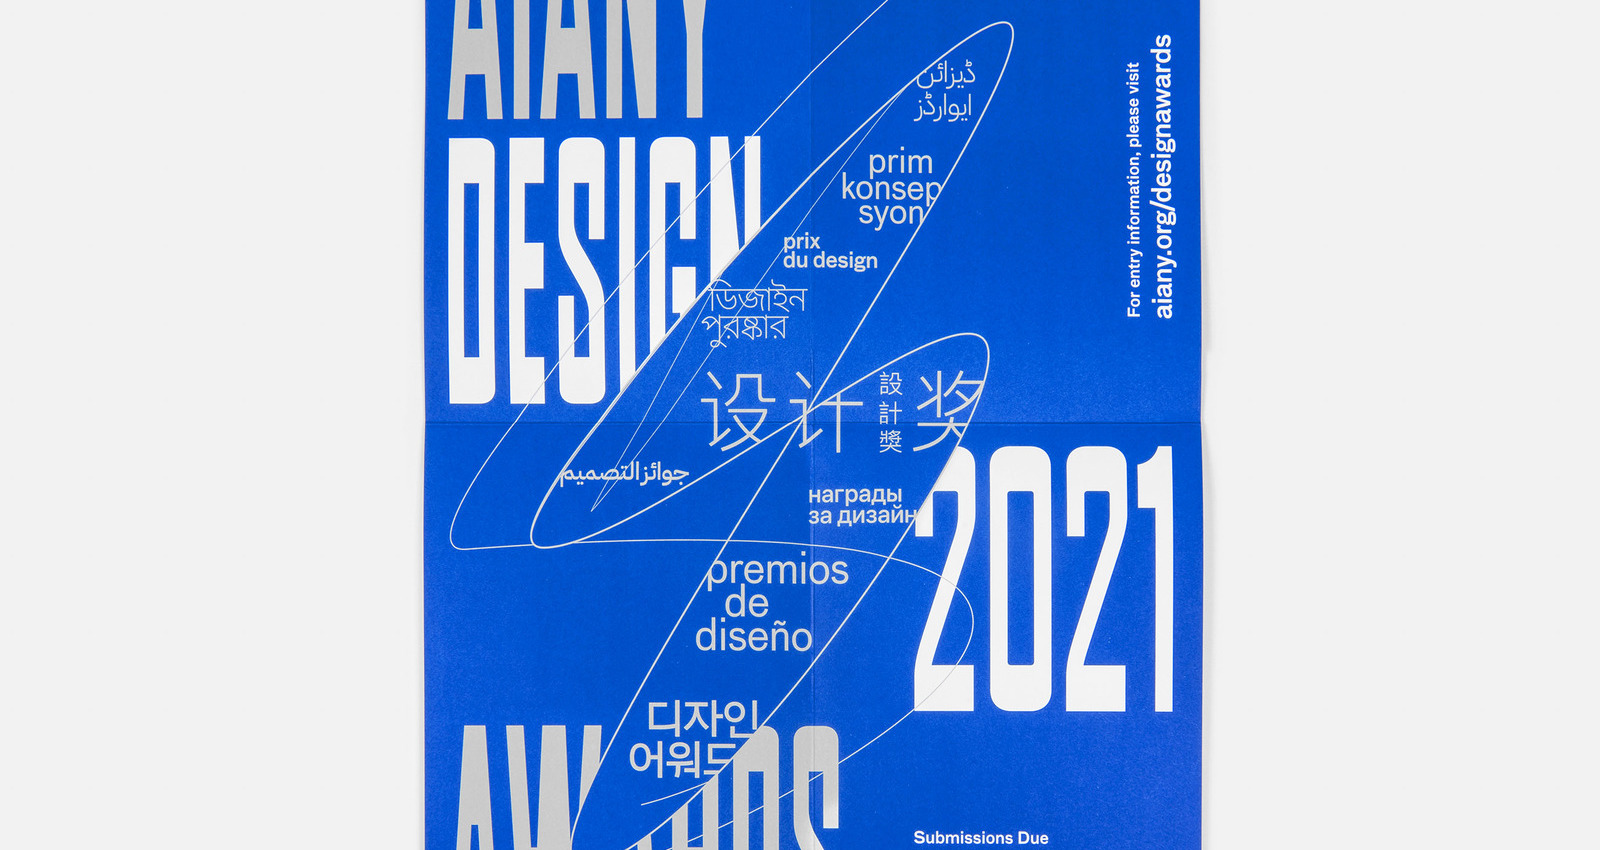 AIANY Design Awards 2021